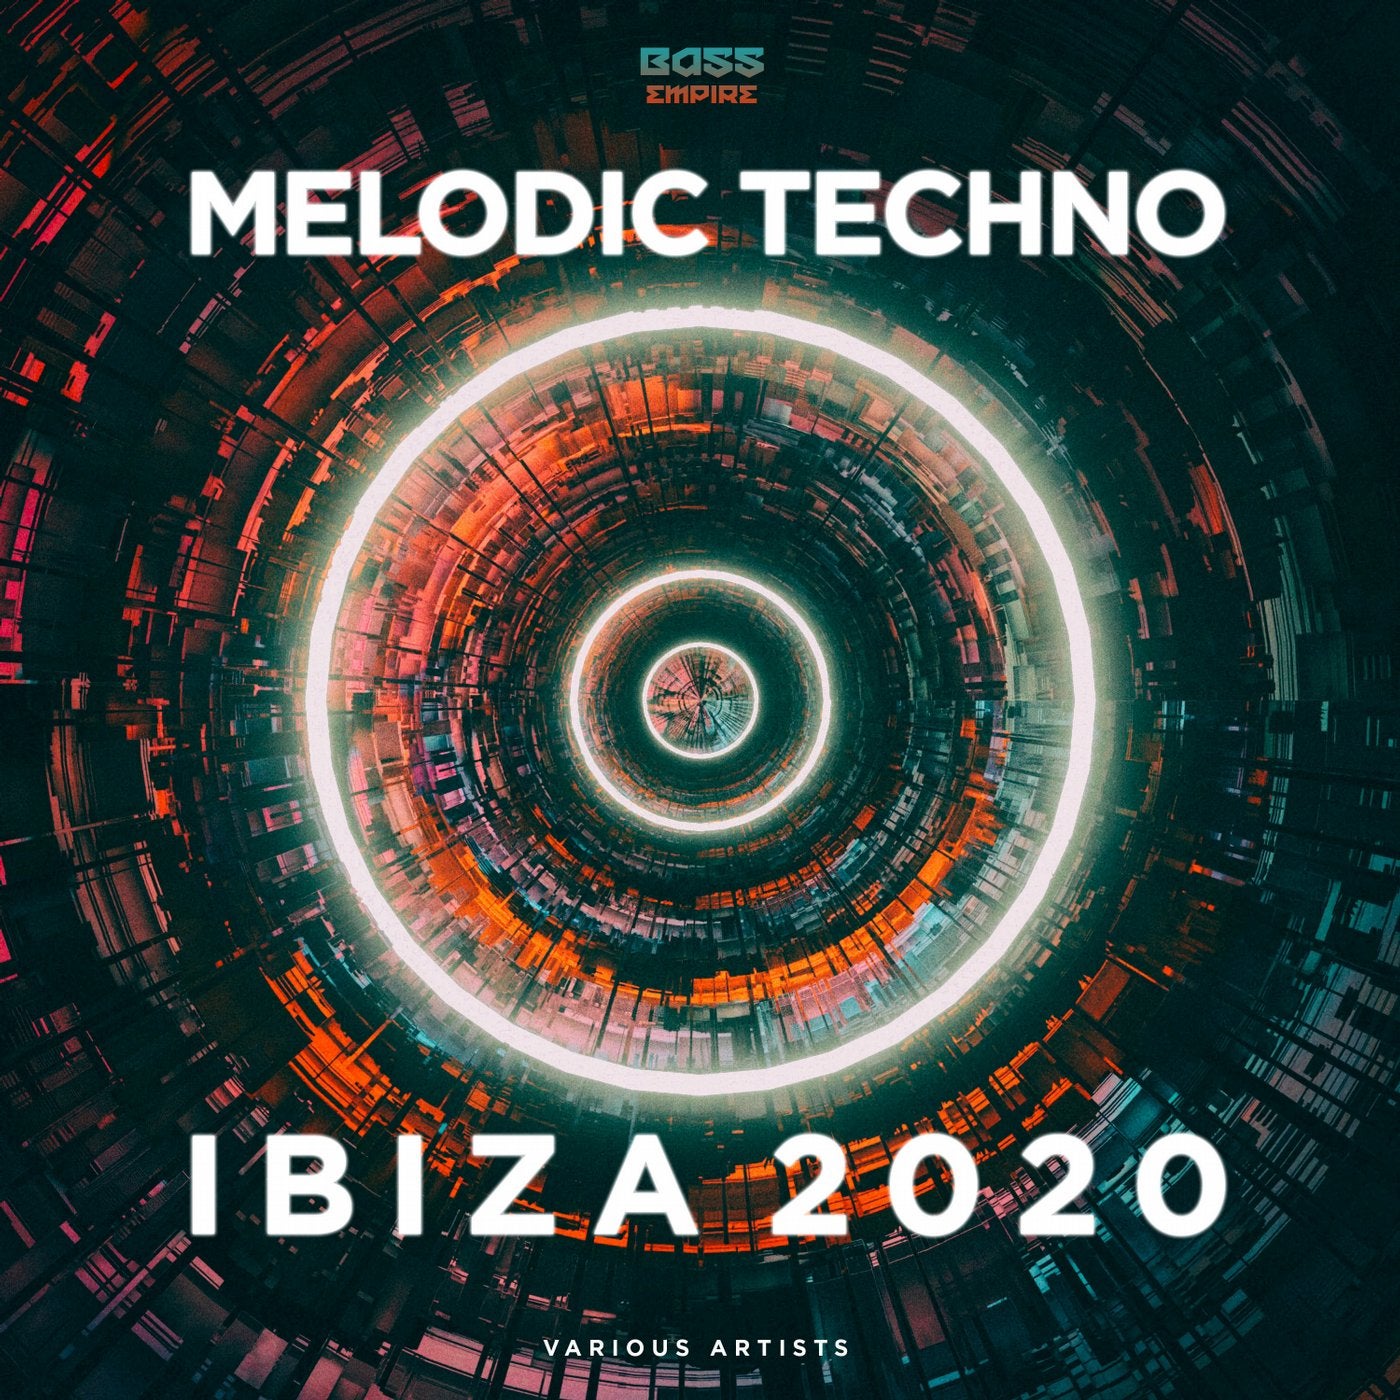 Melodic Techno Ibiza 2020